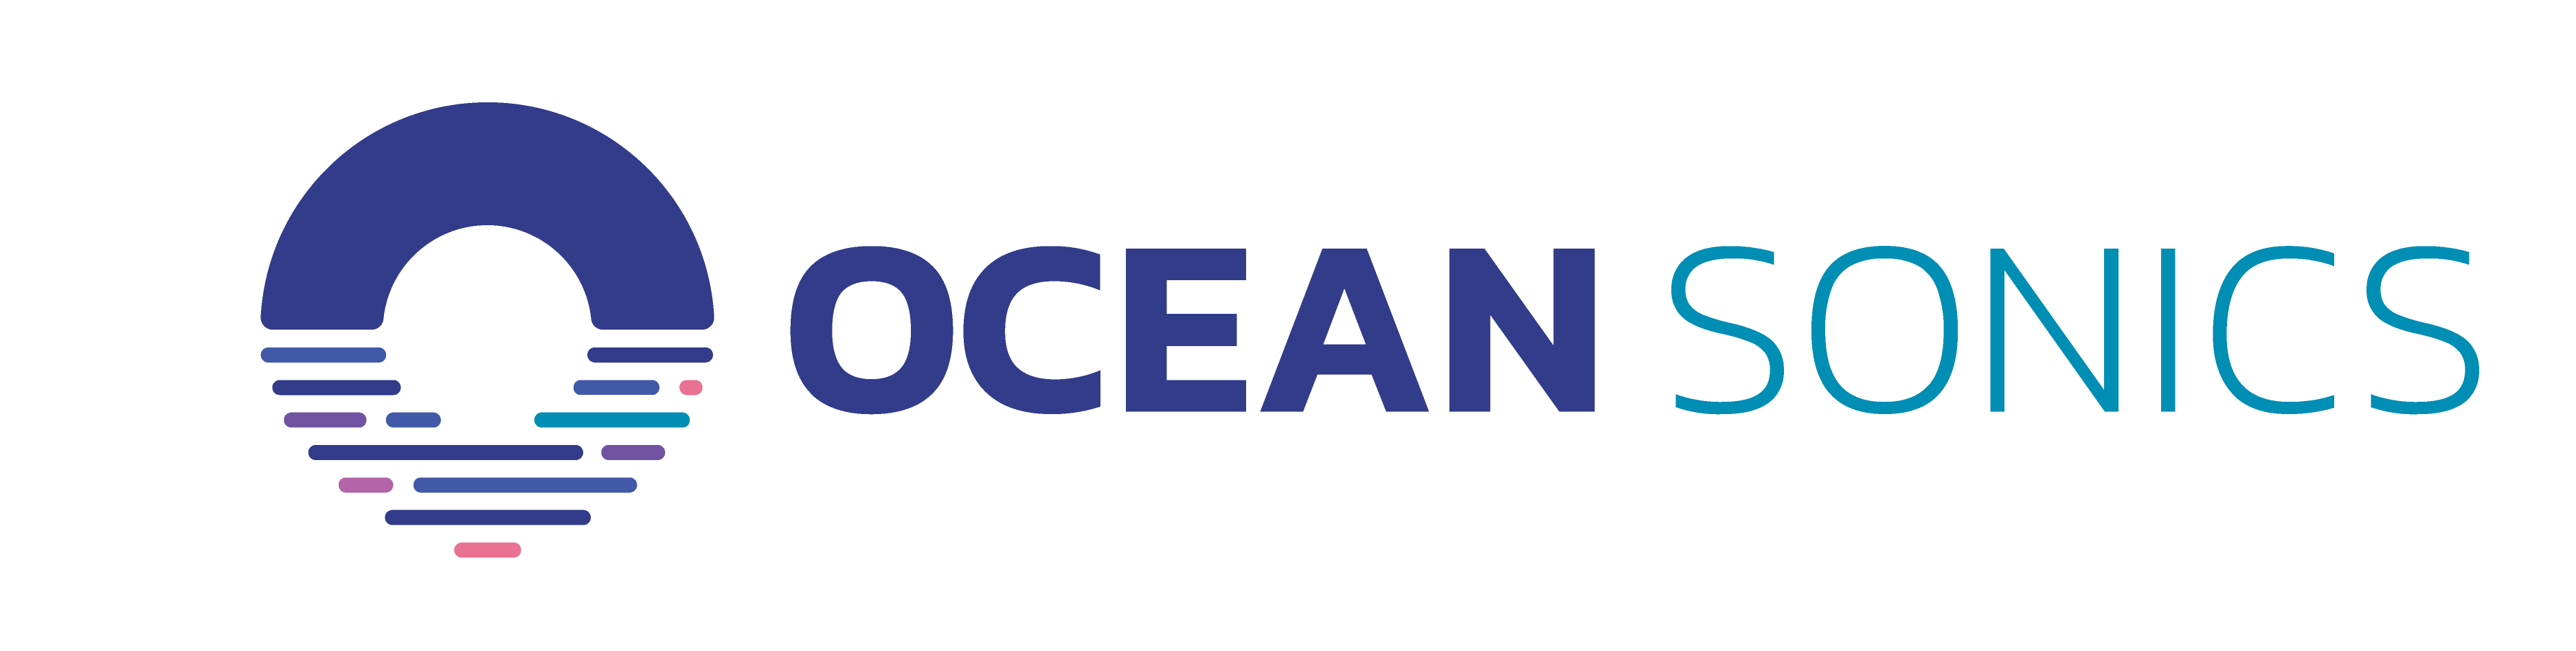 Ocean Sonics Logo